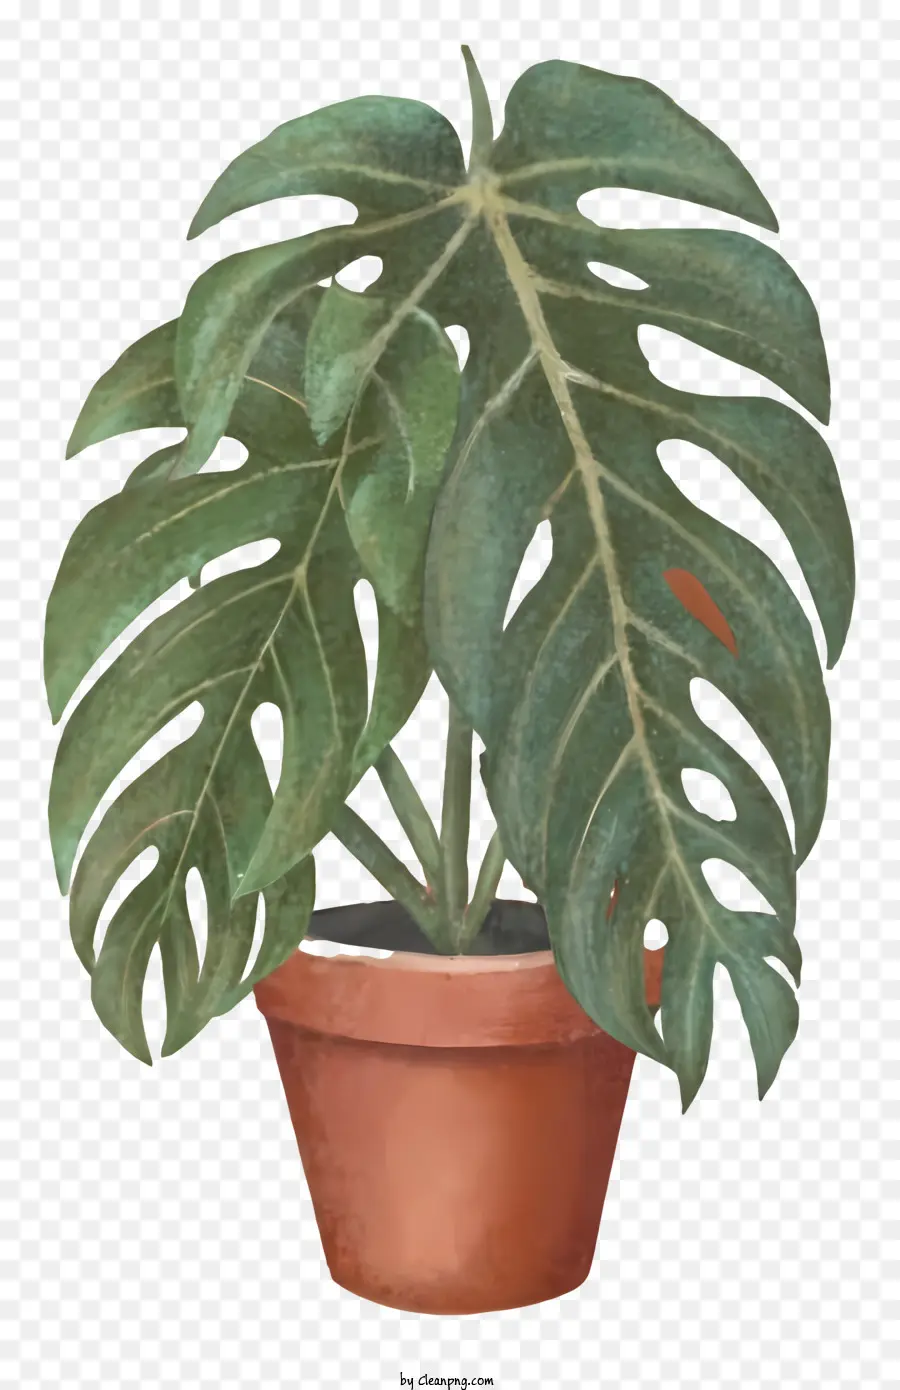 vene in ceramica vene per foglie verdi della pianta in vaso su foglie sane ben curate per la pianta - Pianta in vaso sana e ben mantenuta con foglie verdi